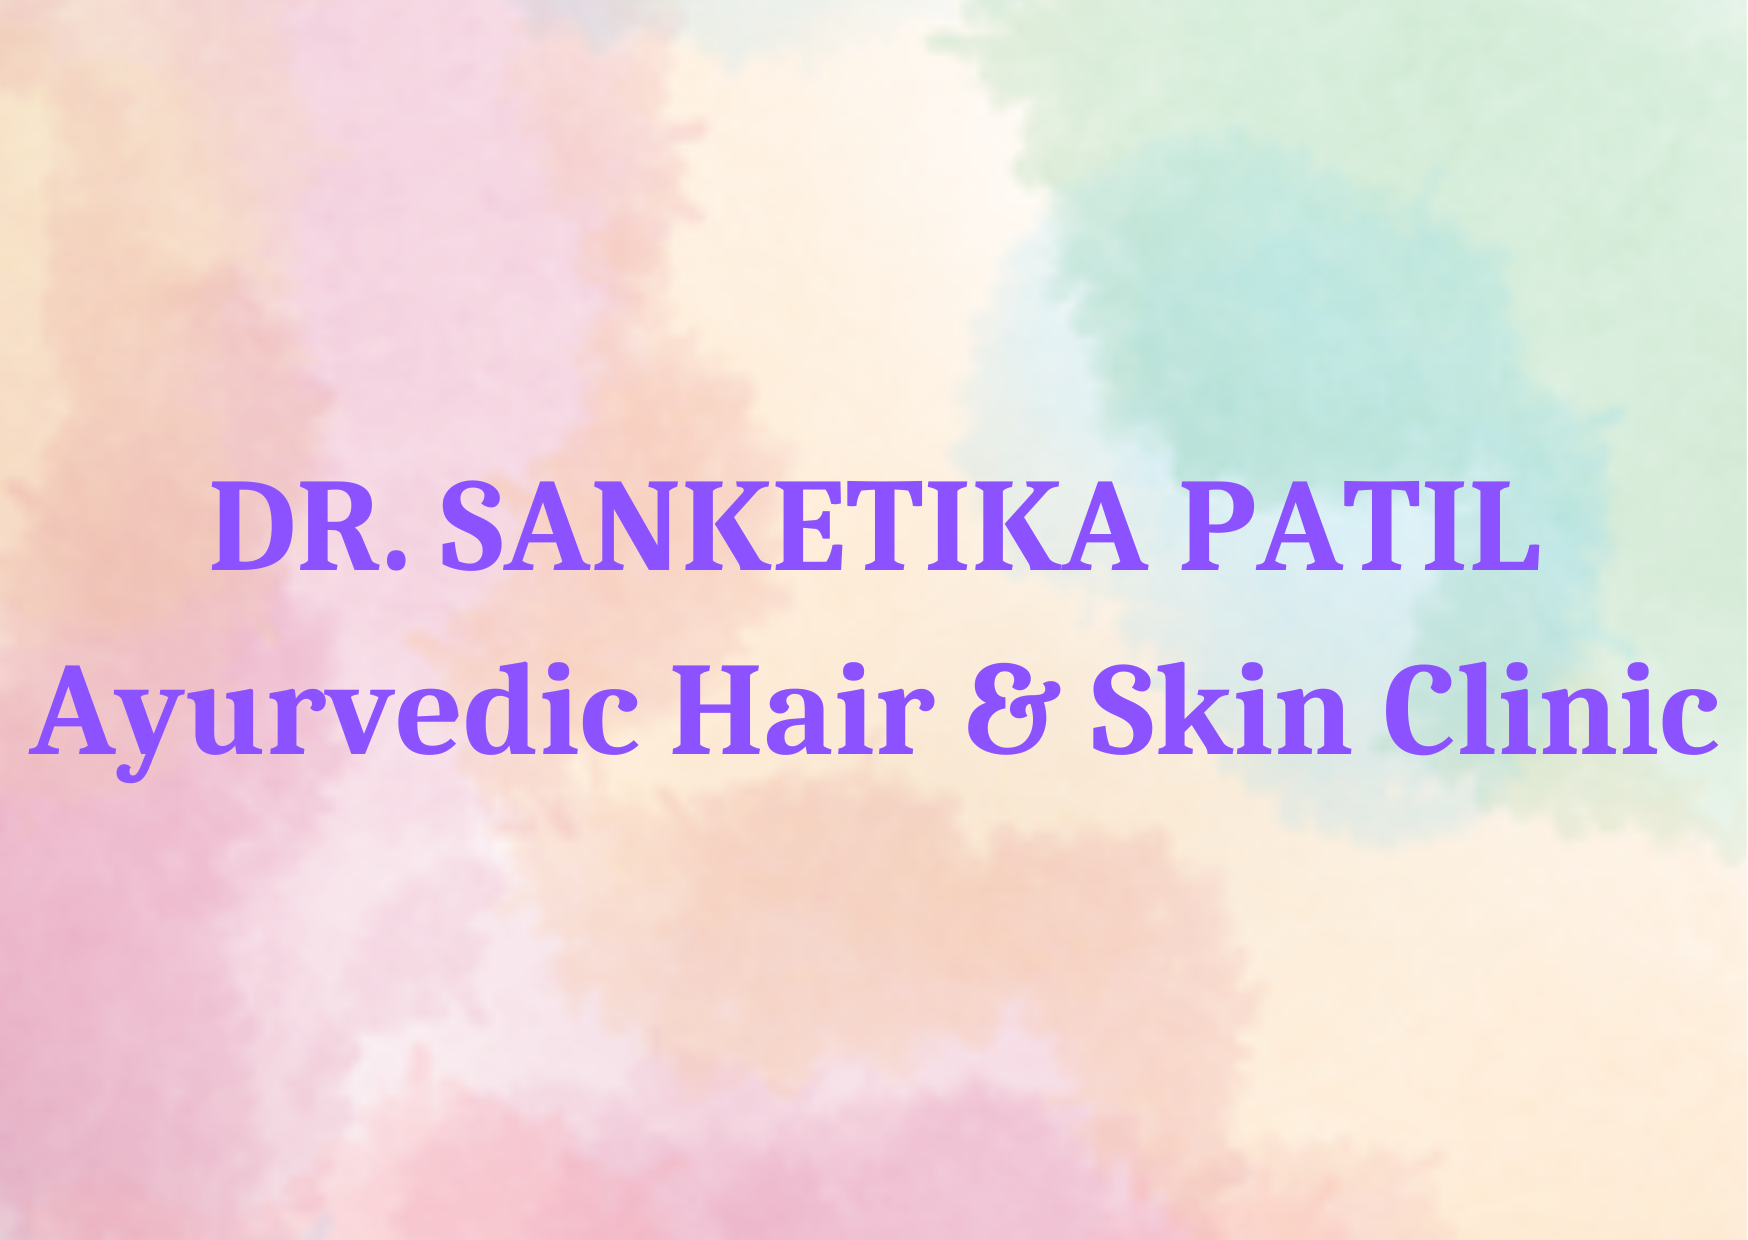 Ayurvedic Hair & Skin Clinic 